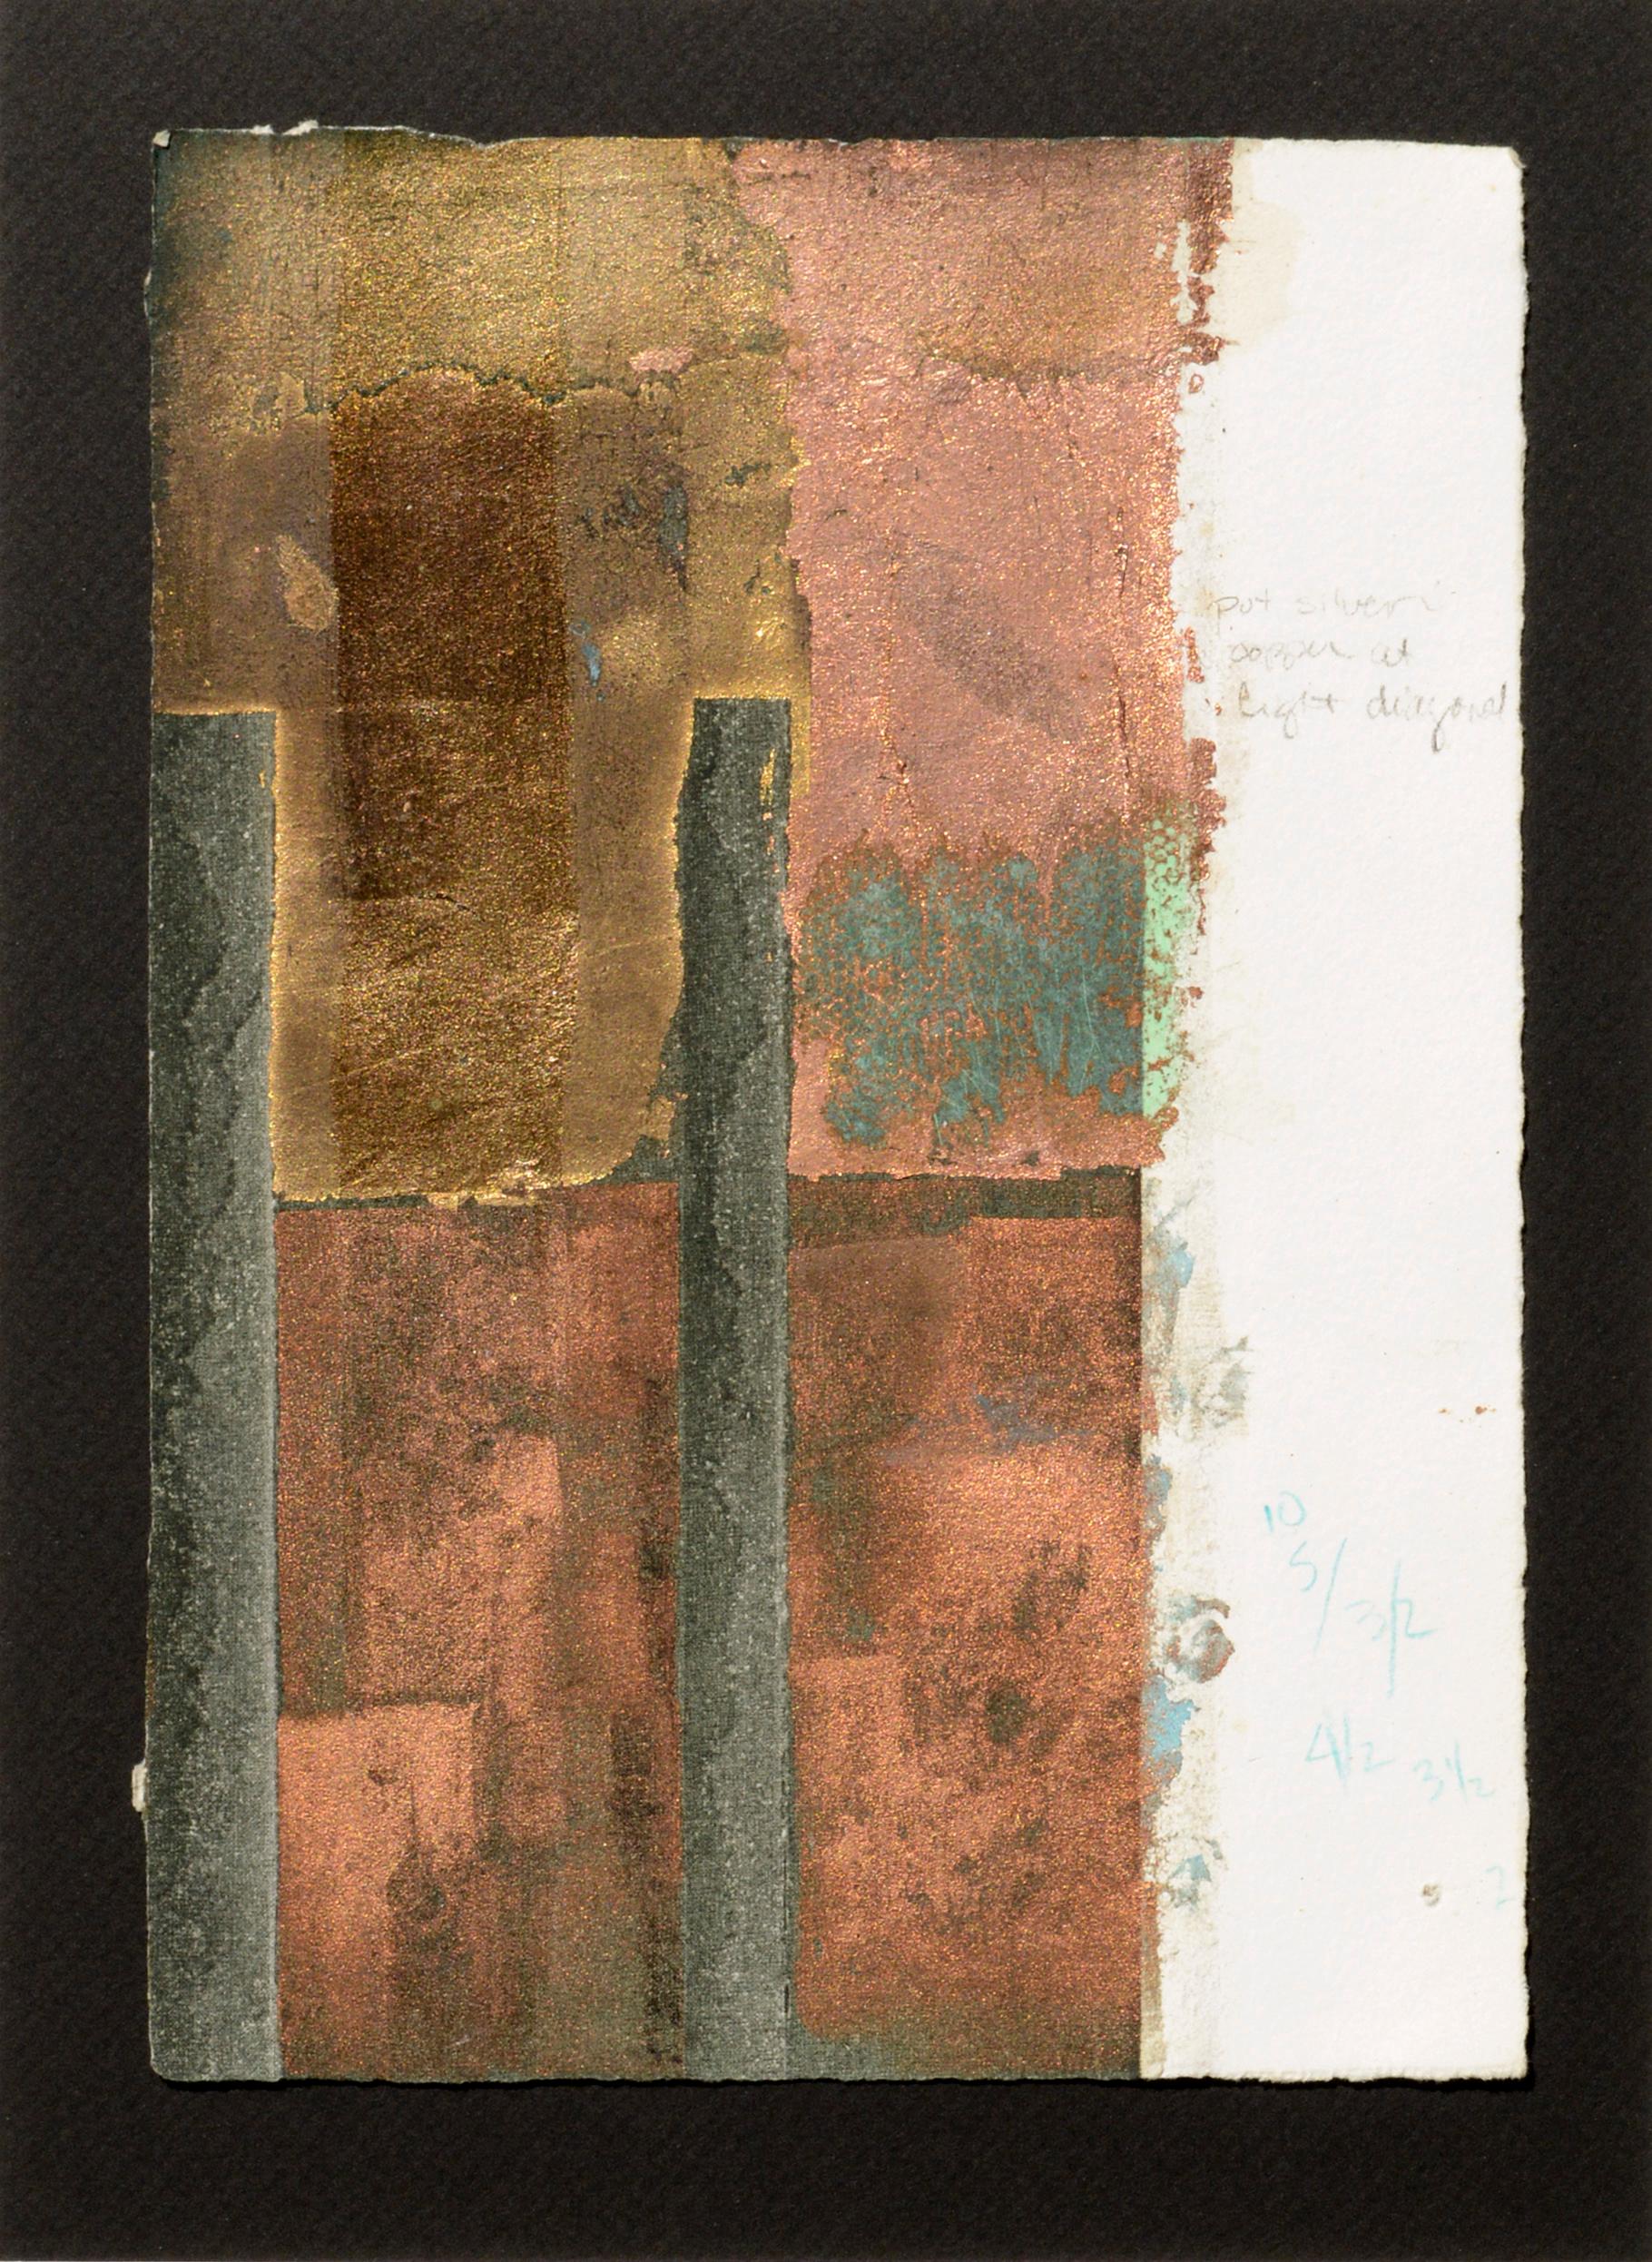 Kupfer- und Blattgold Variationen – Abstrakte Mixed Media-Komposition (Abstrakter Expressionismus), Mixed Media Art, von Patricia A Pearce